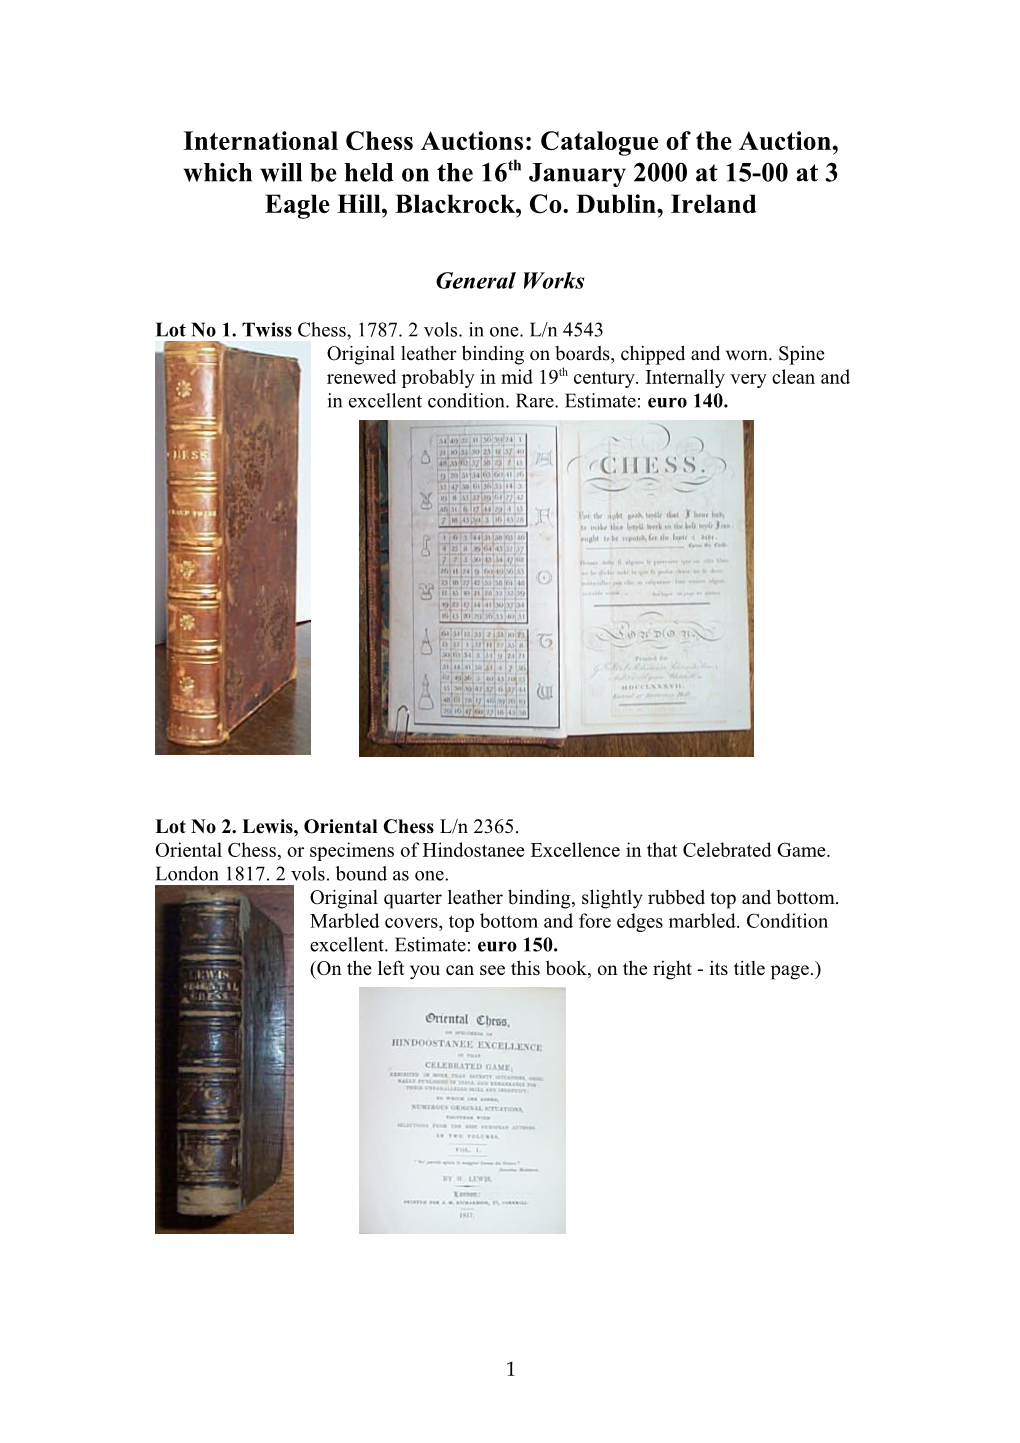 Preliminary Book List,- January 2000 Auction